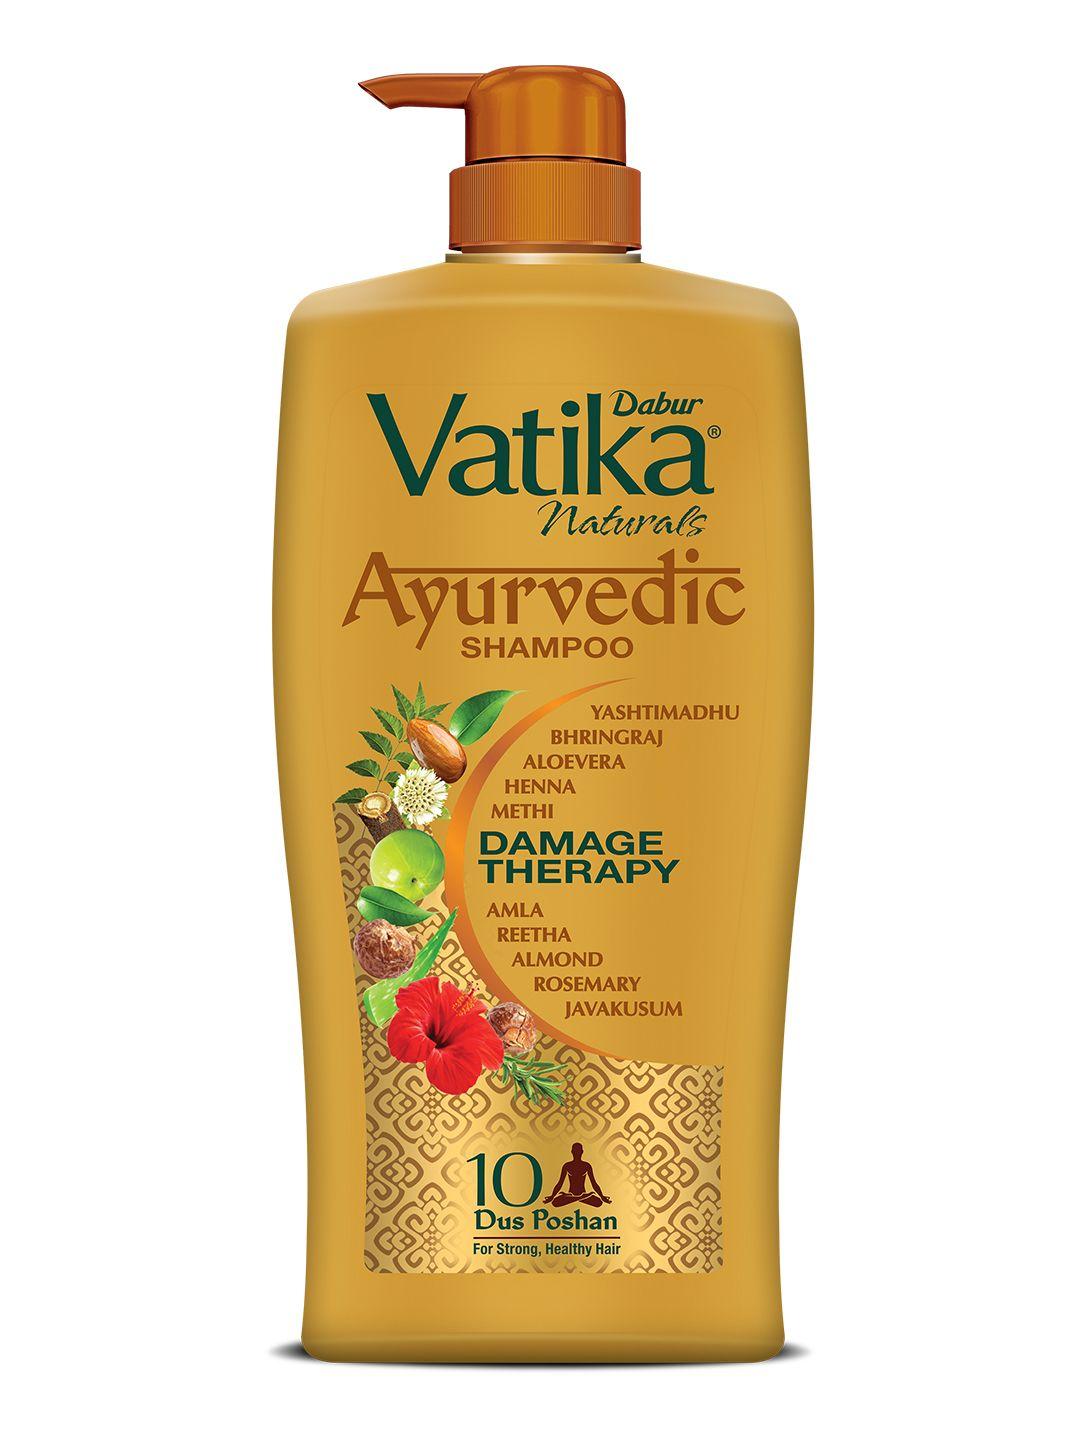 Dabur Vatika Ayurvedic Shampoo Damage Therapy with 10 Natural Herbs - 1L